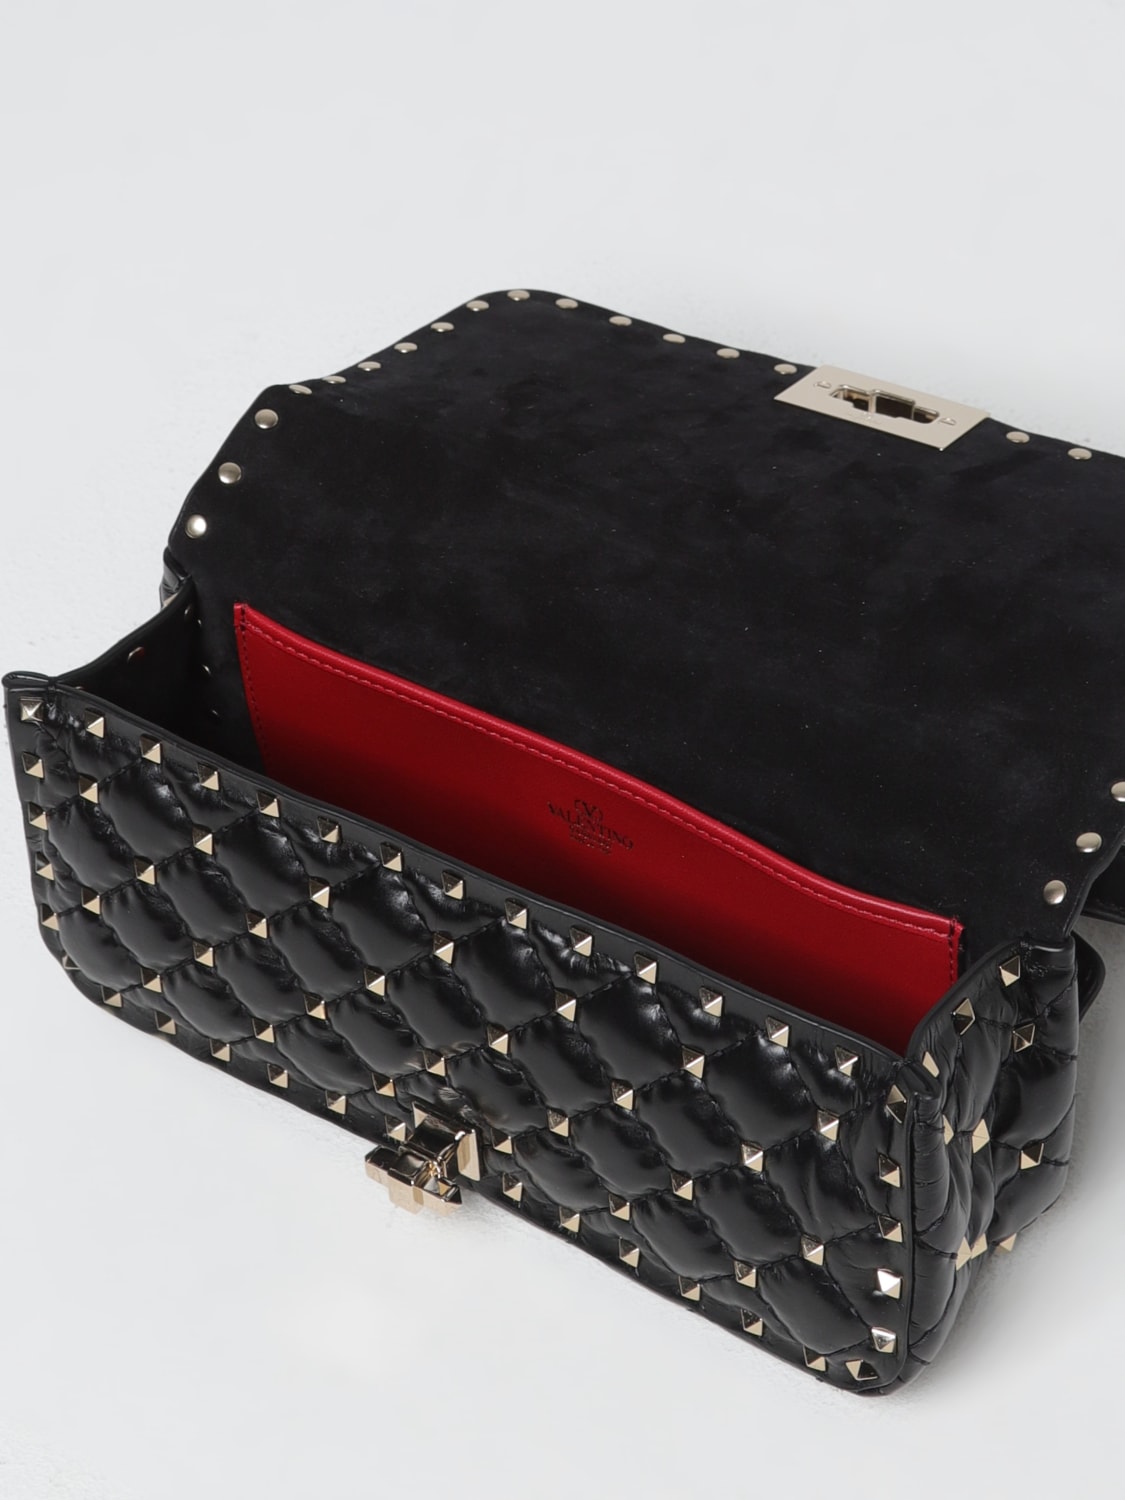 Medium Nappa Rockstud Spike Bag for Woman in Black